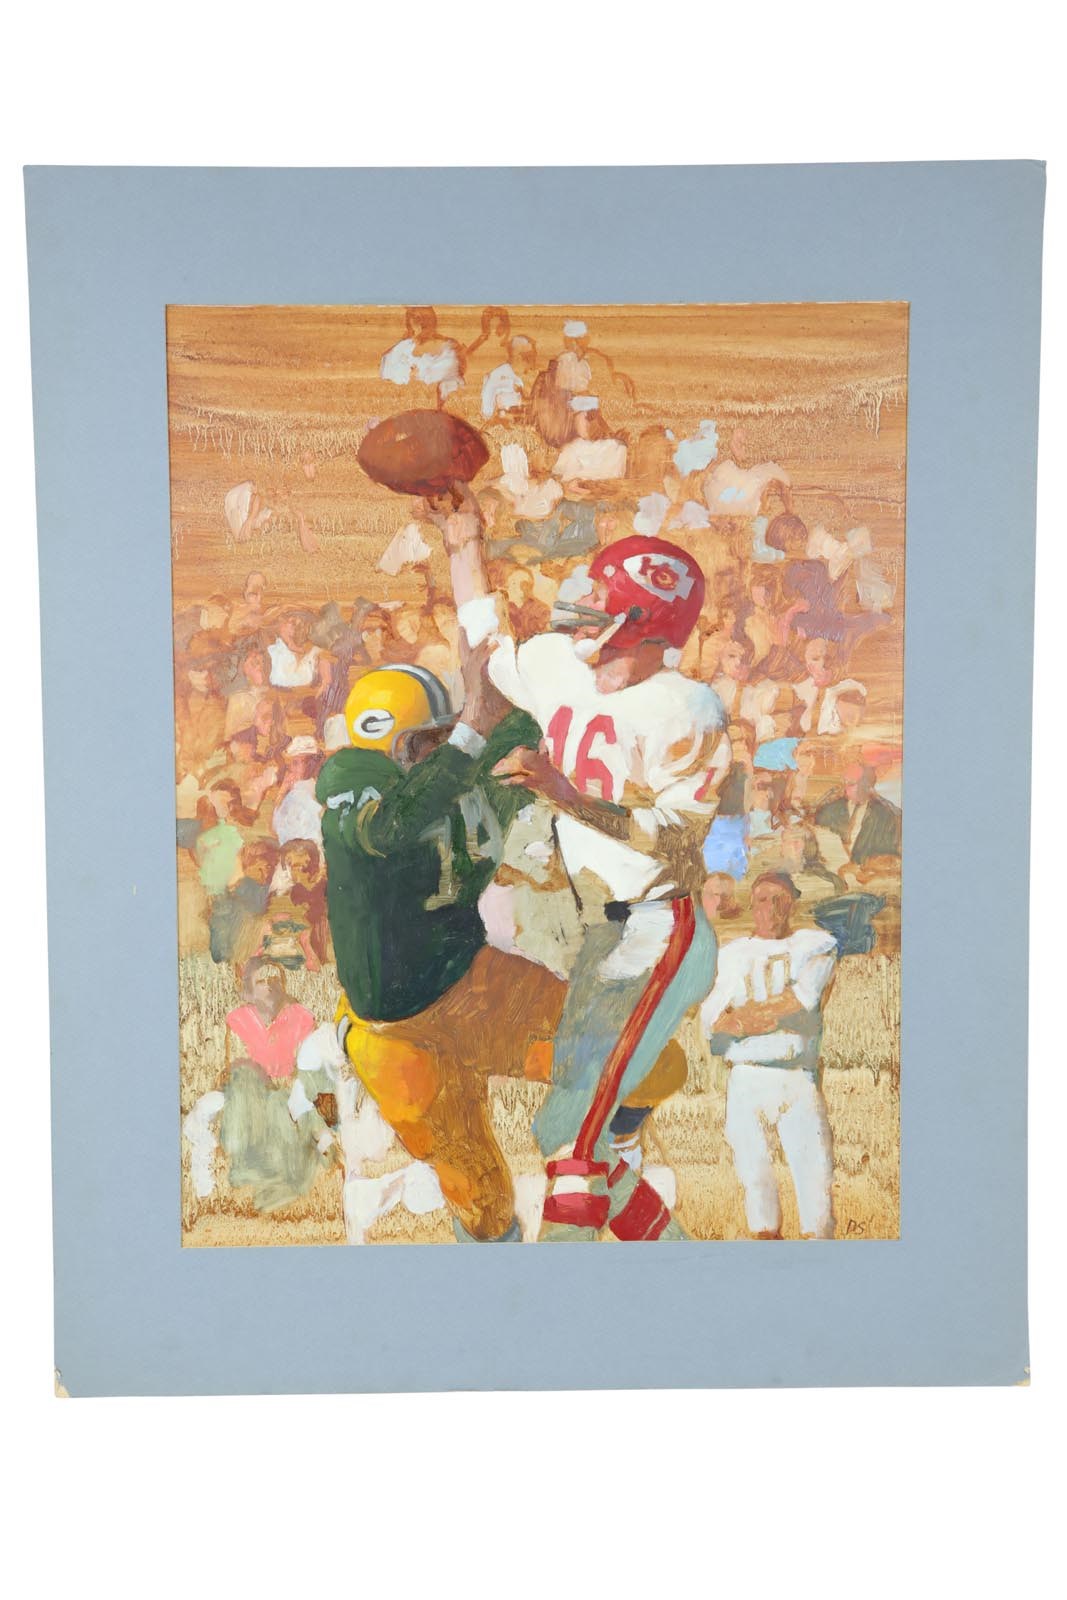 - 1967 Super Bowl Green Bay Packers v KC Chiefs Original Artwork by Daniel Schwartz - Published in Super Bowl IX Program